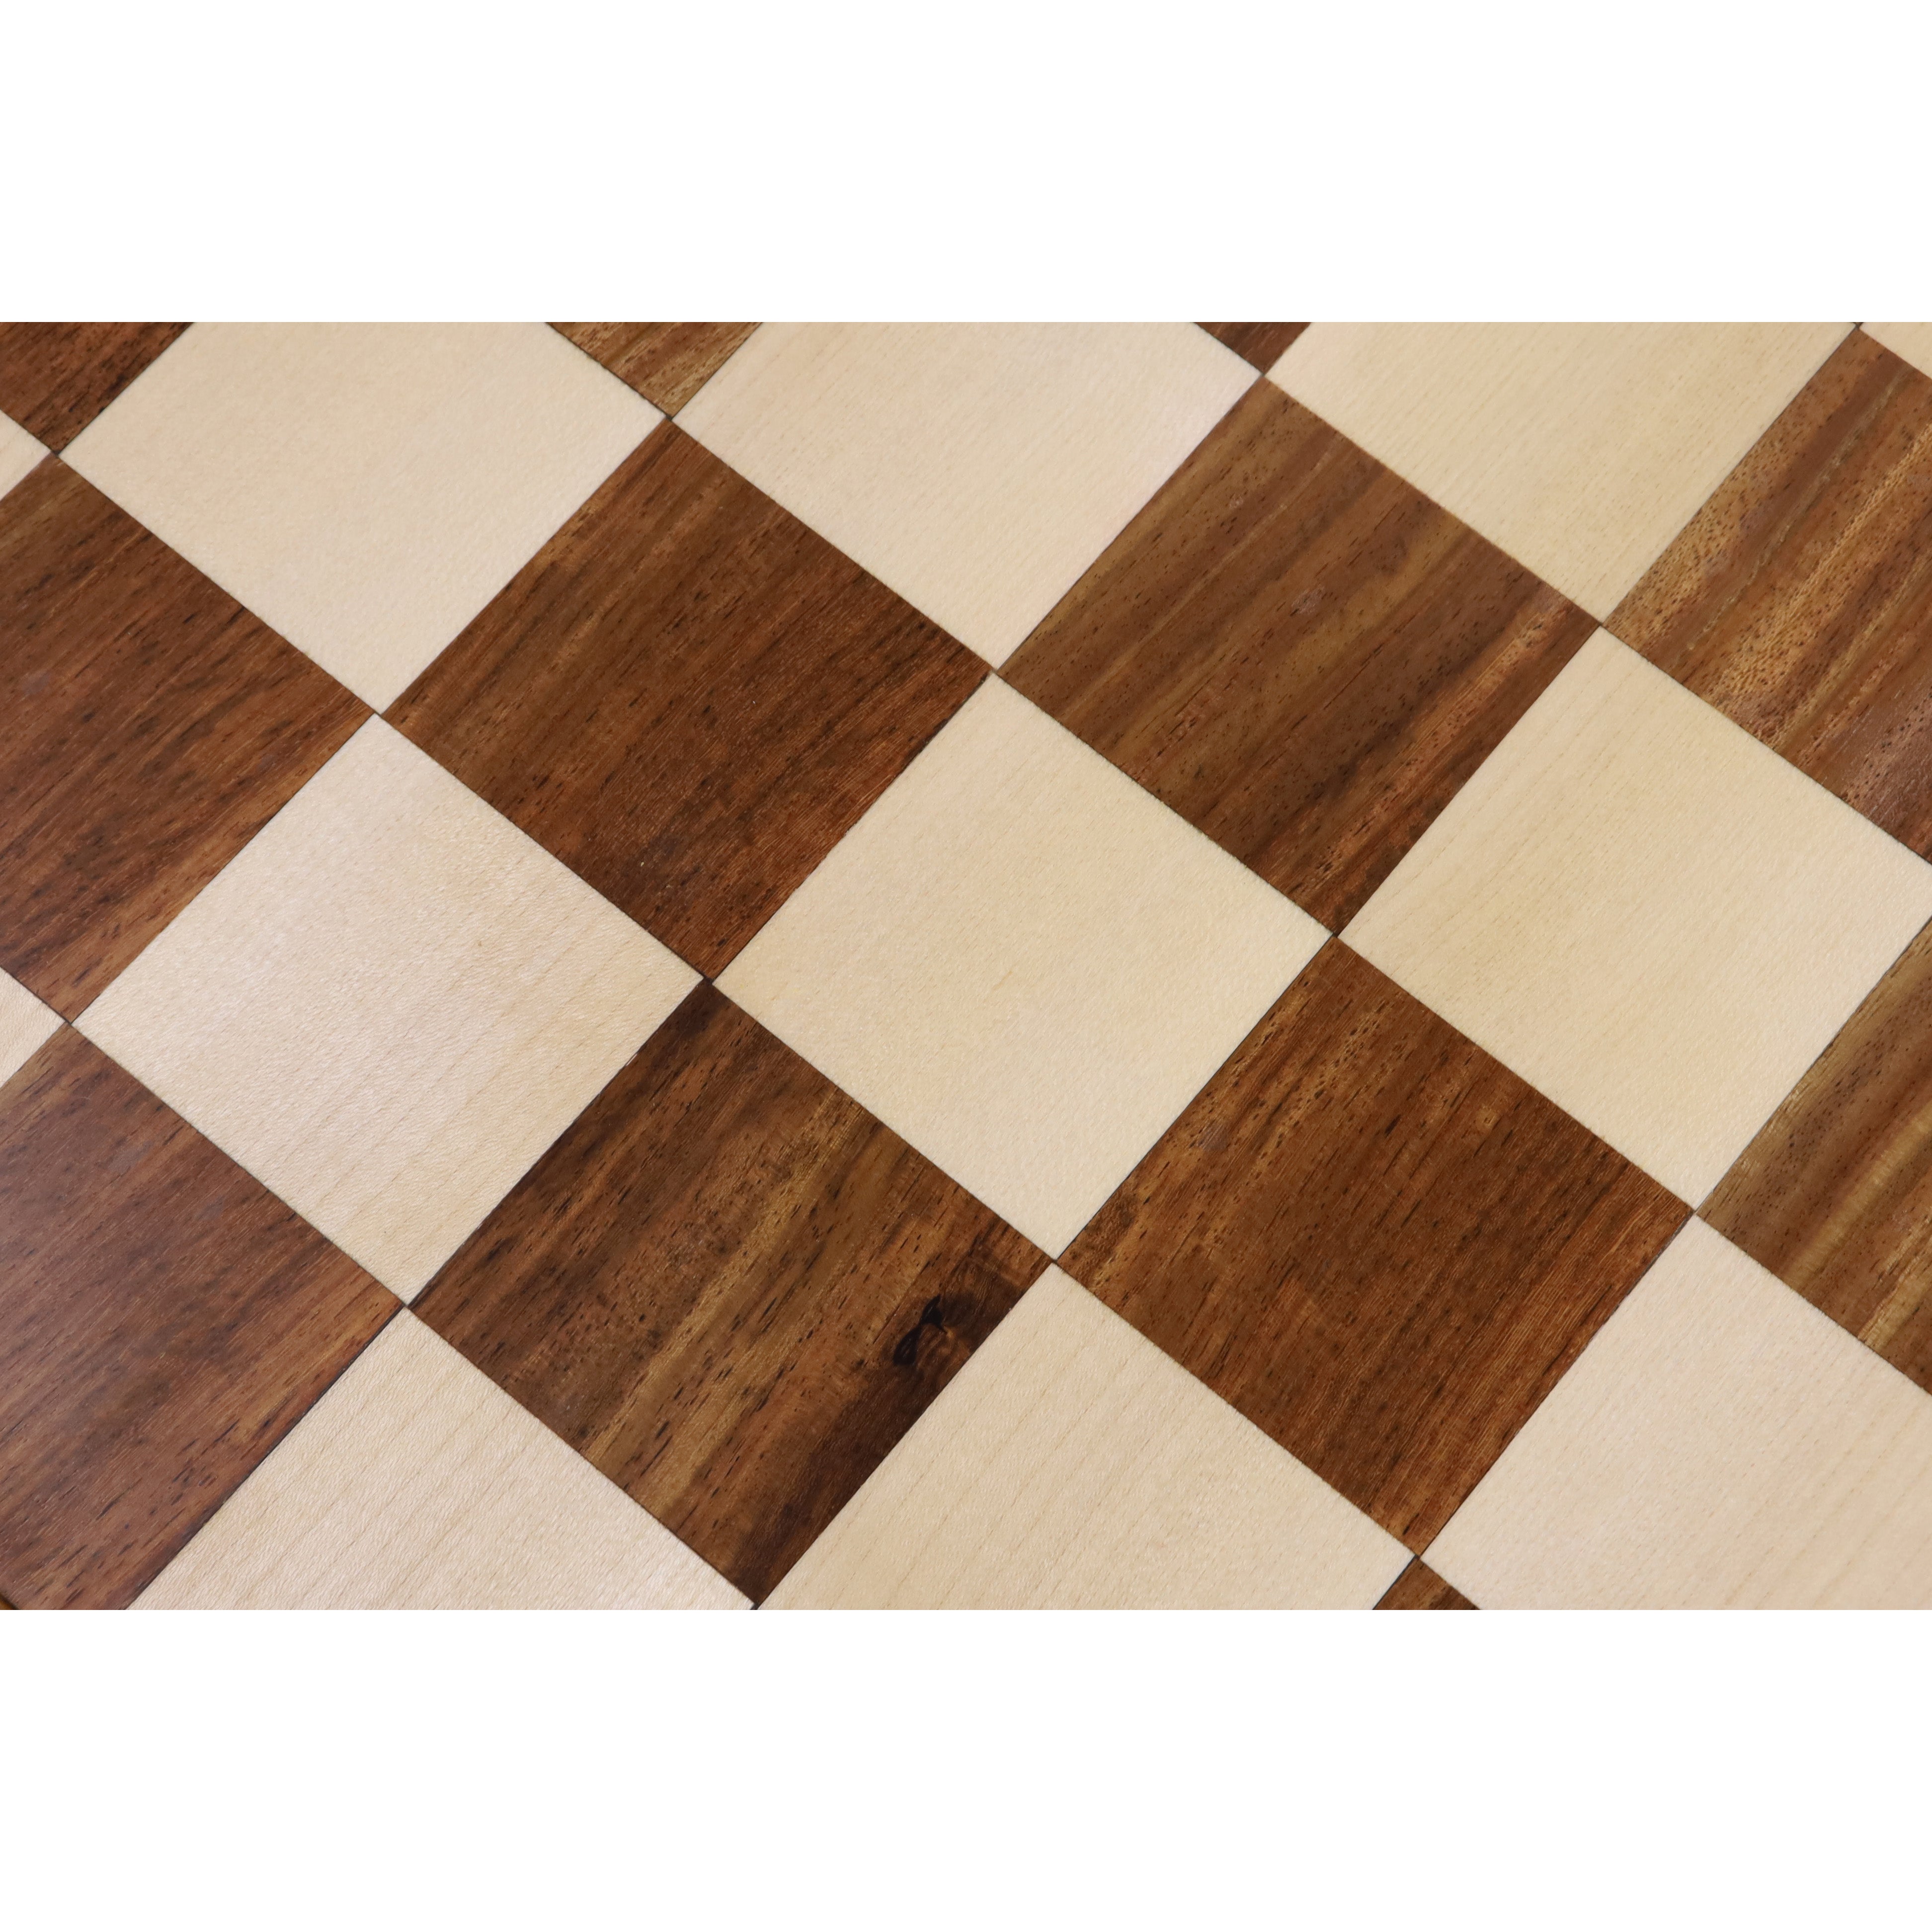 Buy online Maple Wood Luxury Chessboard with Teak Border